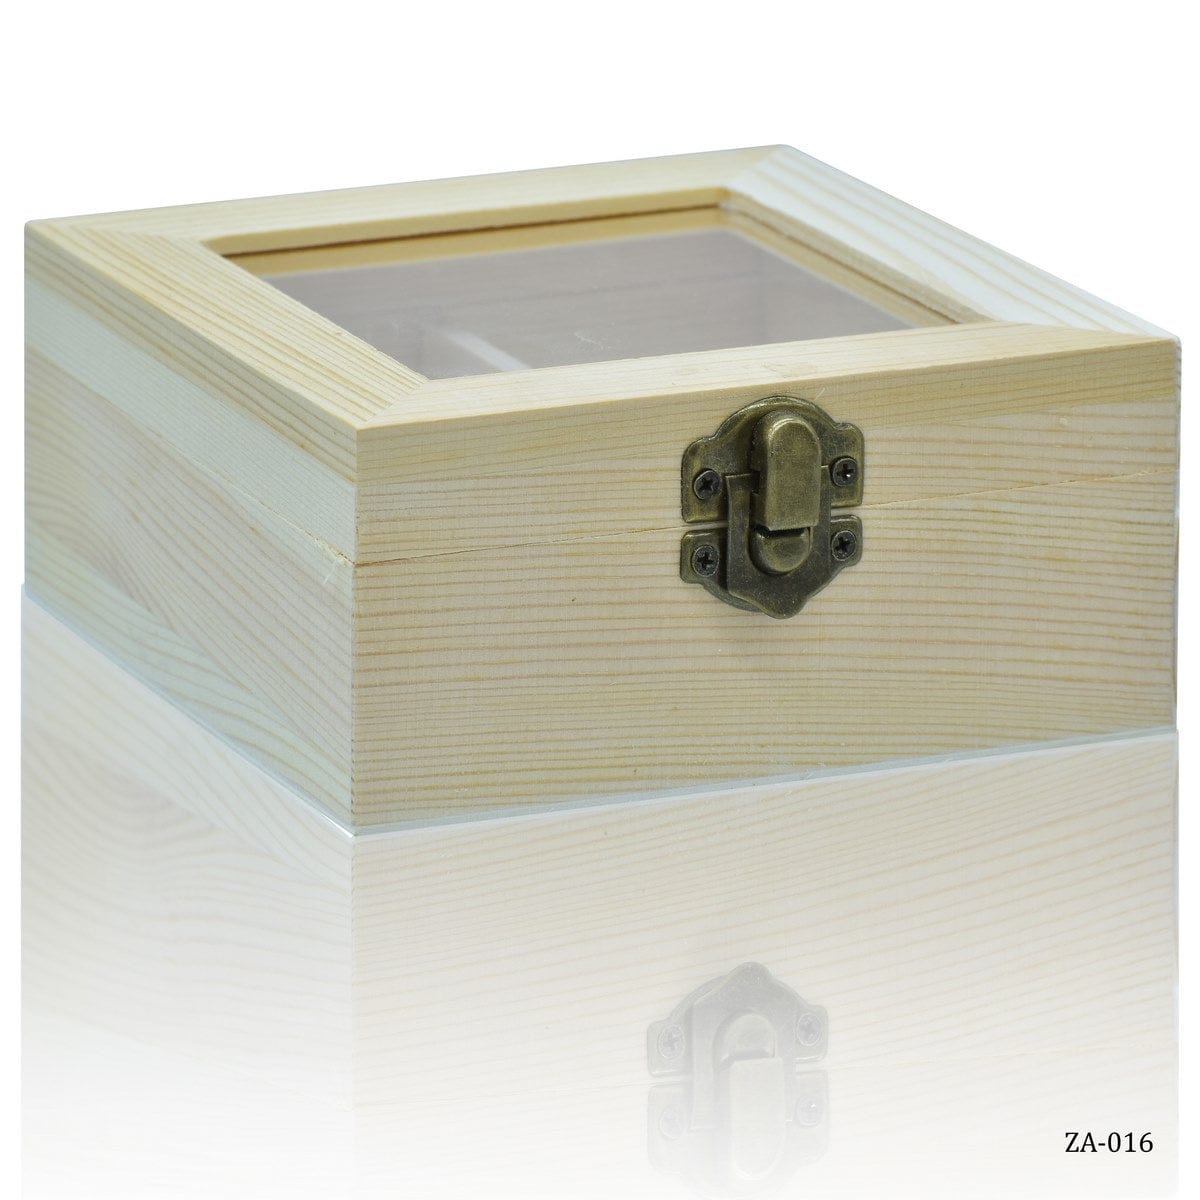 jags-mumbai Wooden box Wooden Empty Box Small Top Window Square 5X5X2 Inch ZA-016